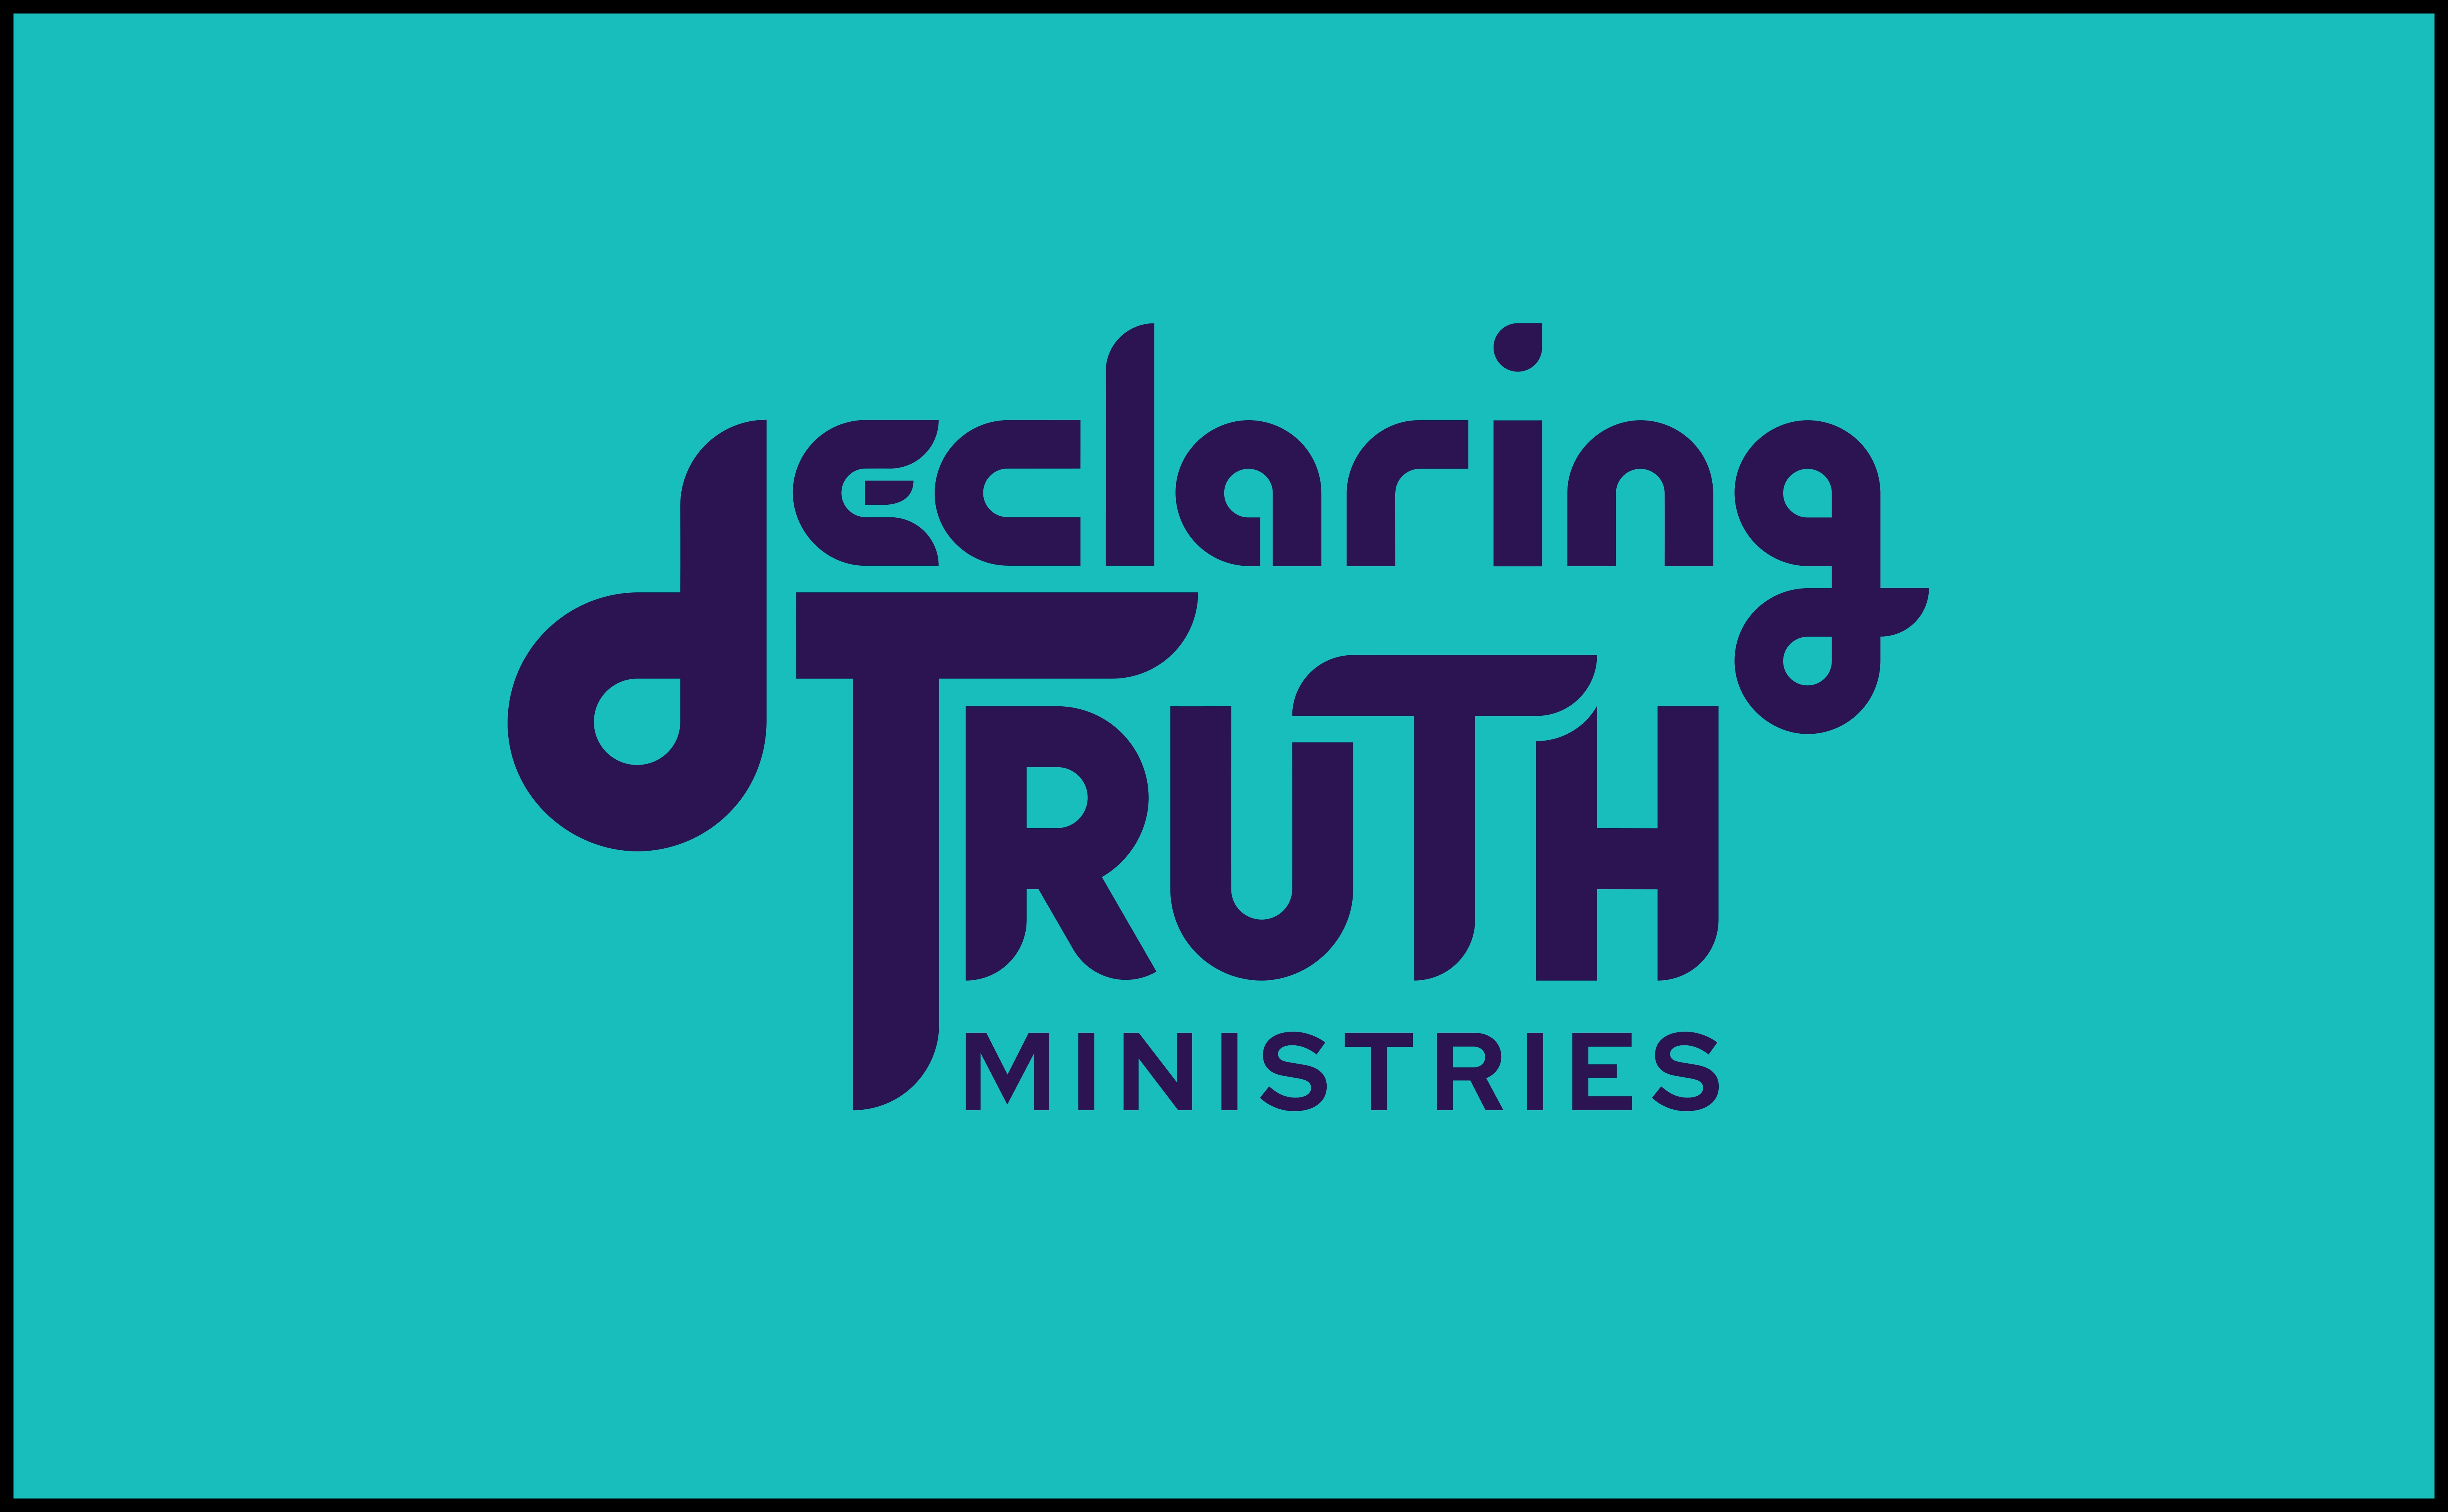 Declaring Truth Ministries logo